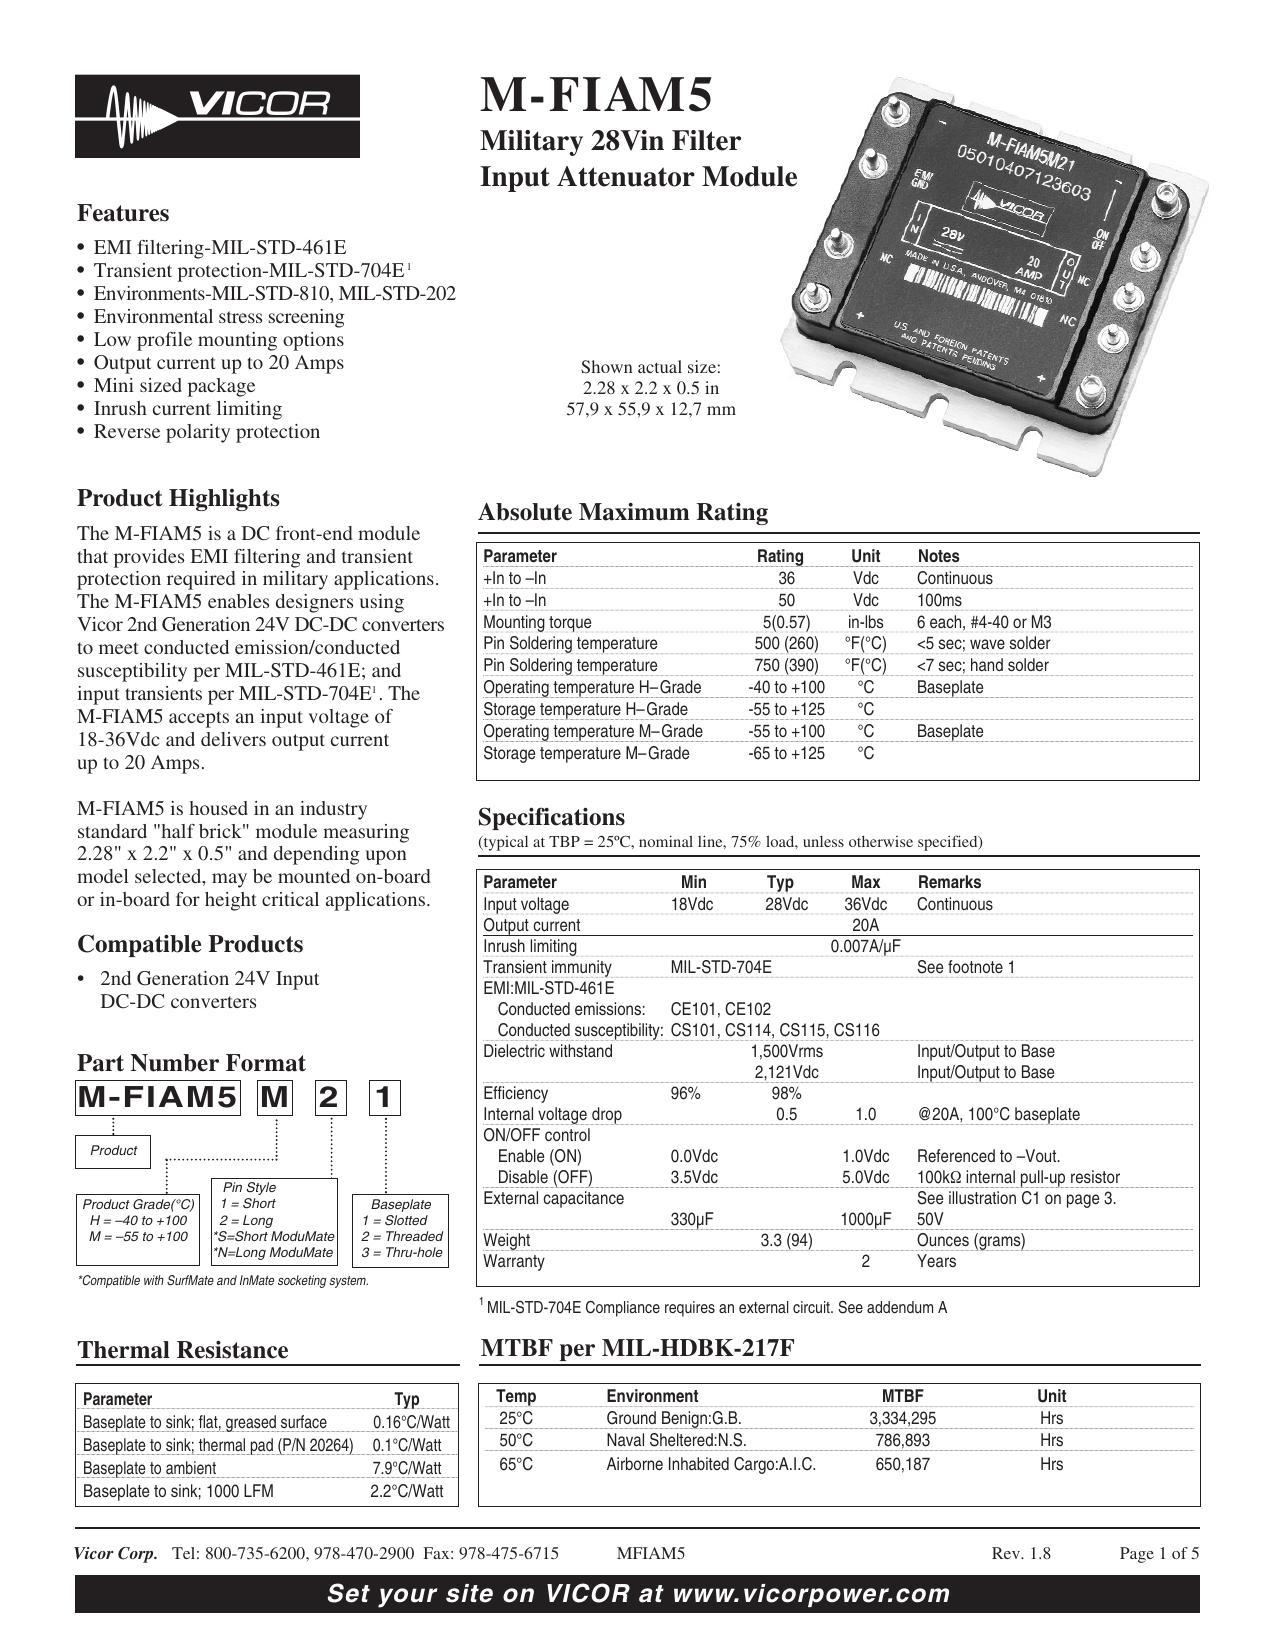 vicor-m-fiam5-military-28vin-filter-input-attenuator-module.pdf